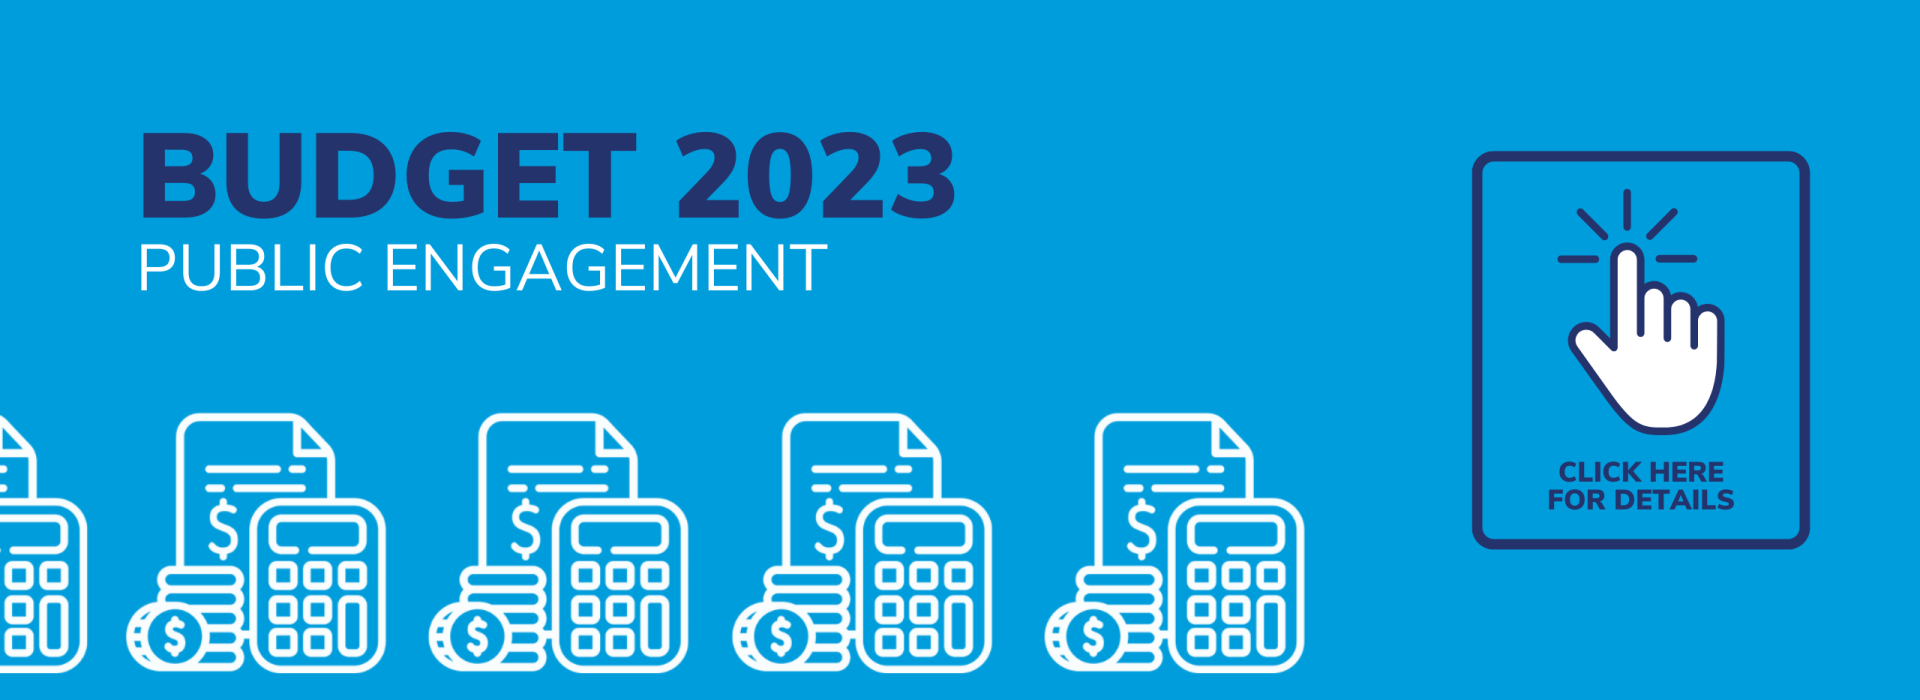 Budget 2023 Engagement Banner (1)